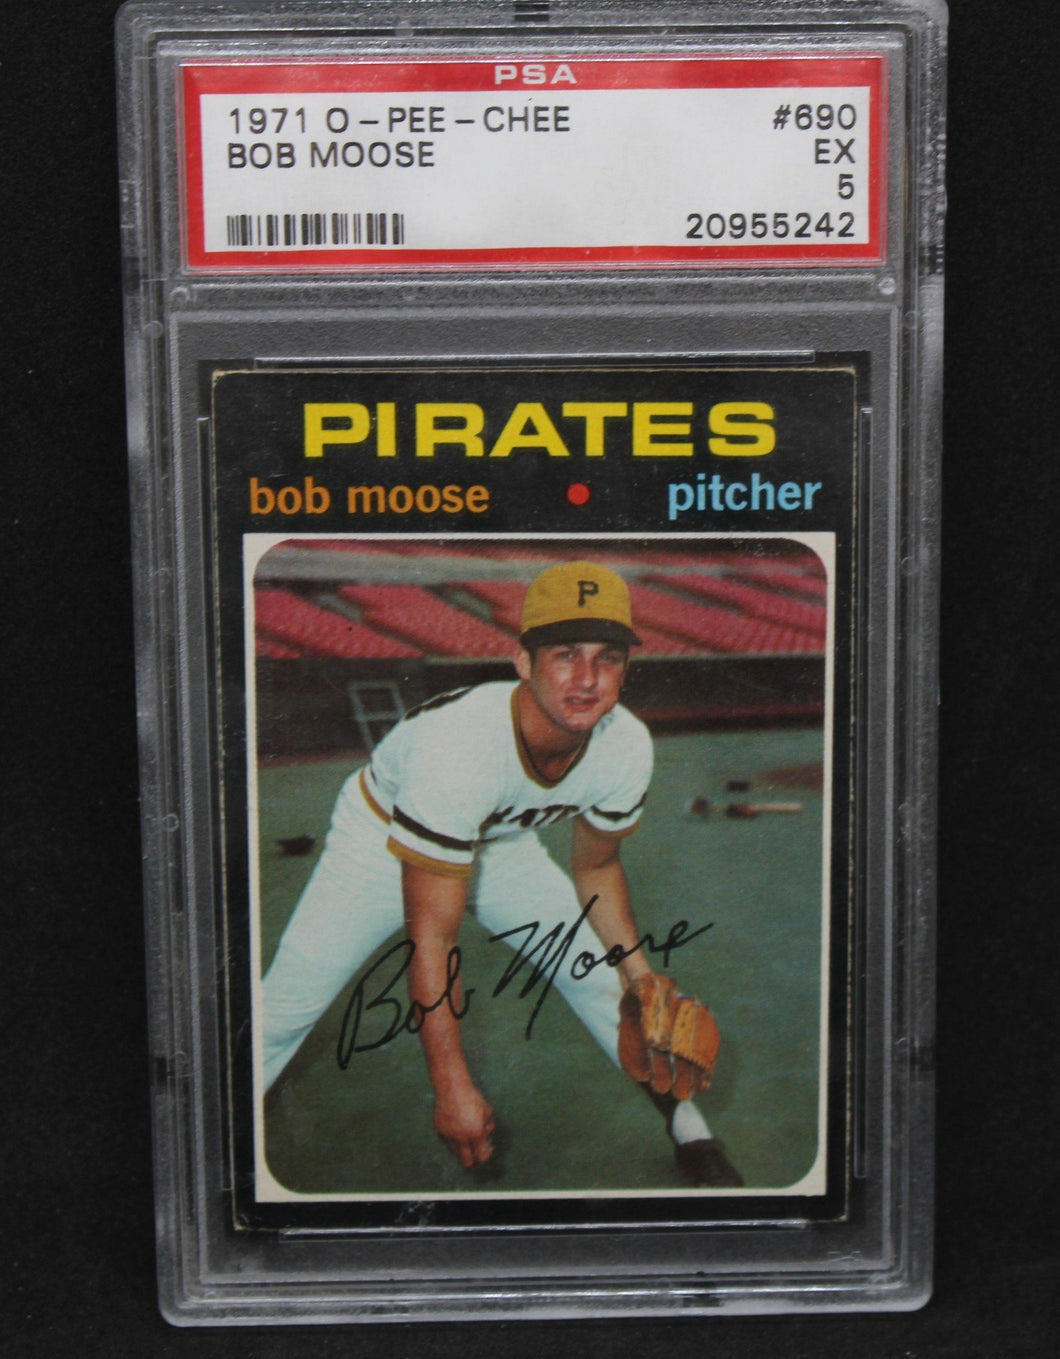 1971 O-Pee-Chee Bob Moose #690 PSA Graded EX 5 Baseball Card